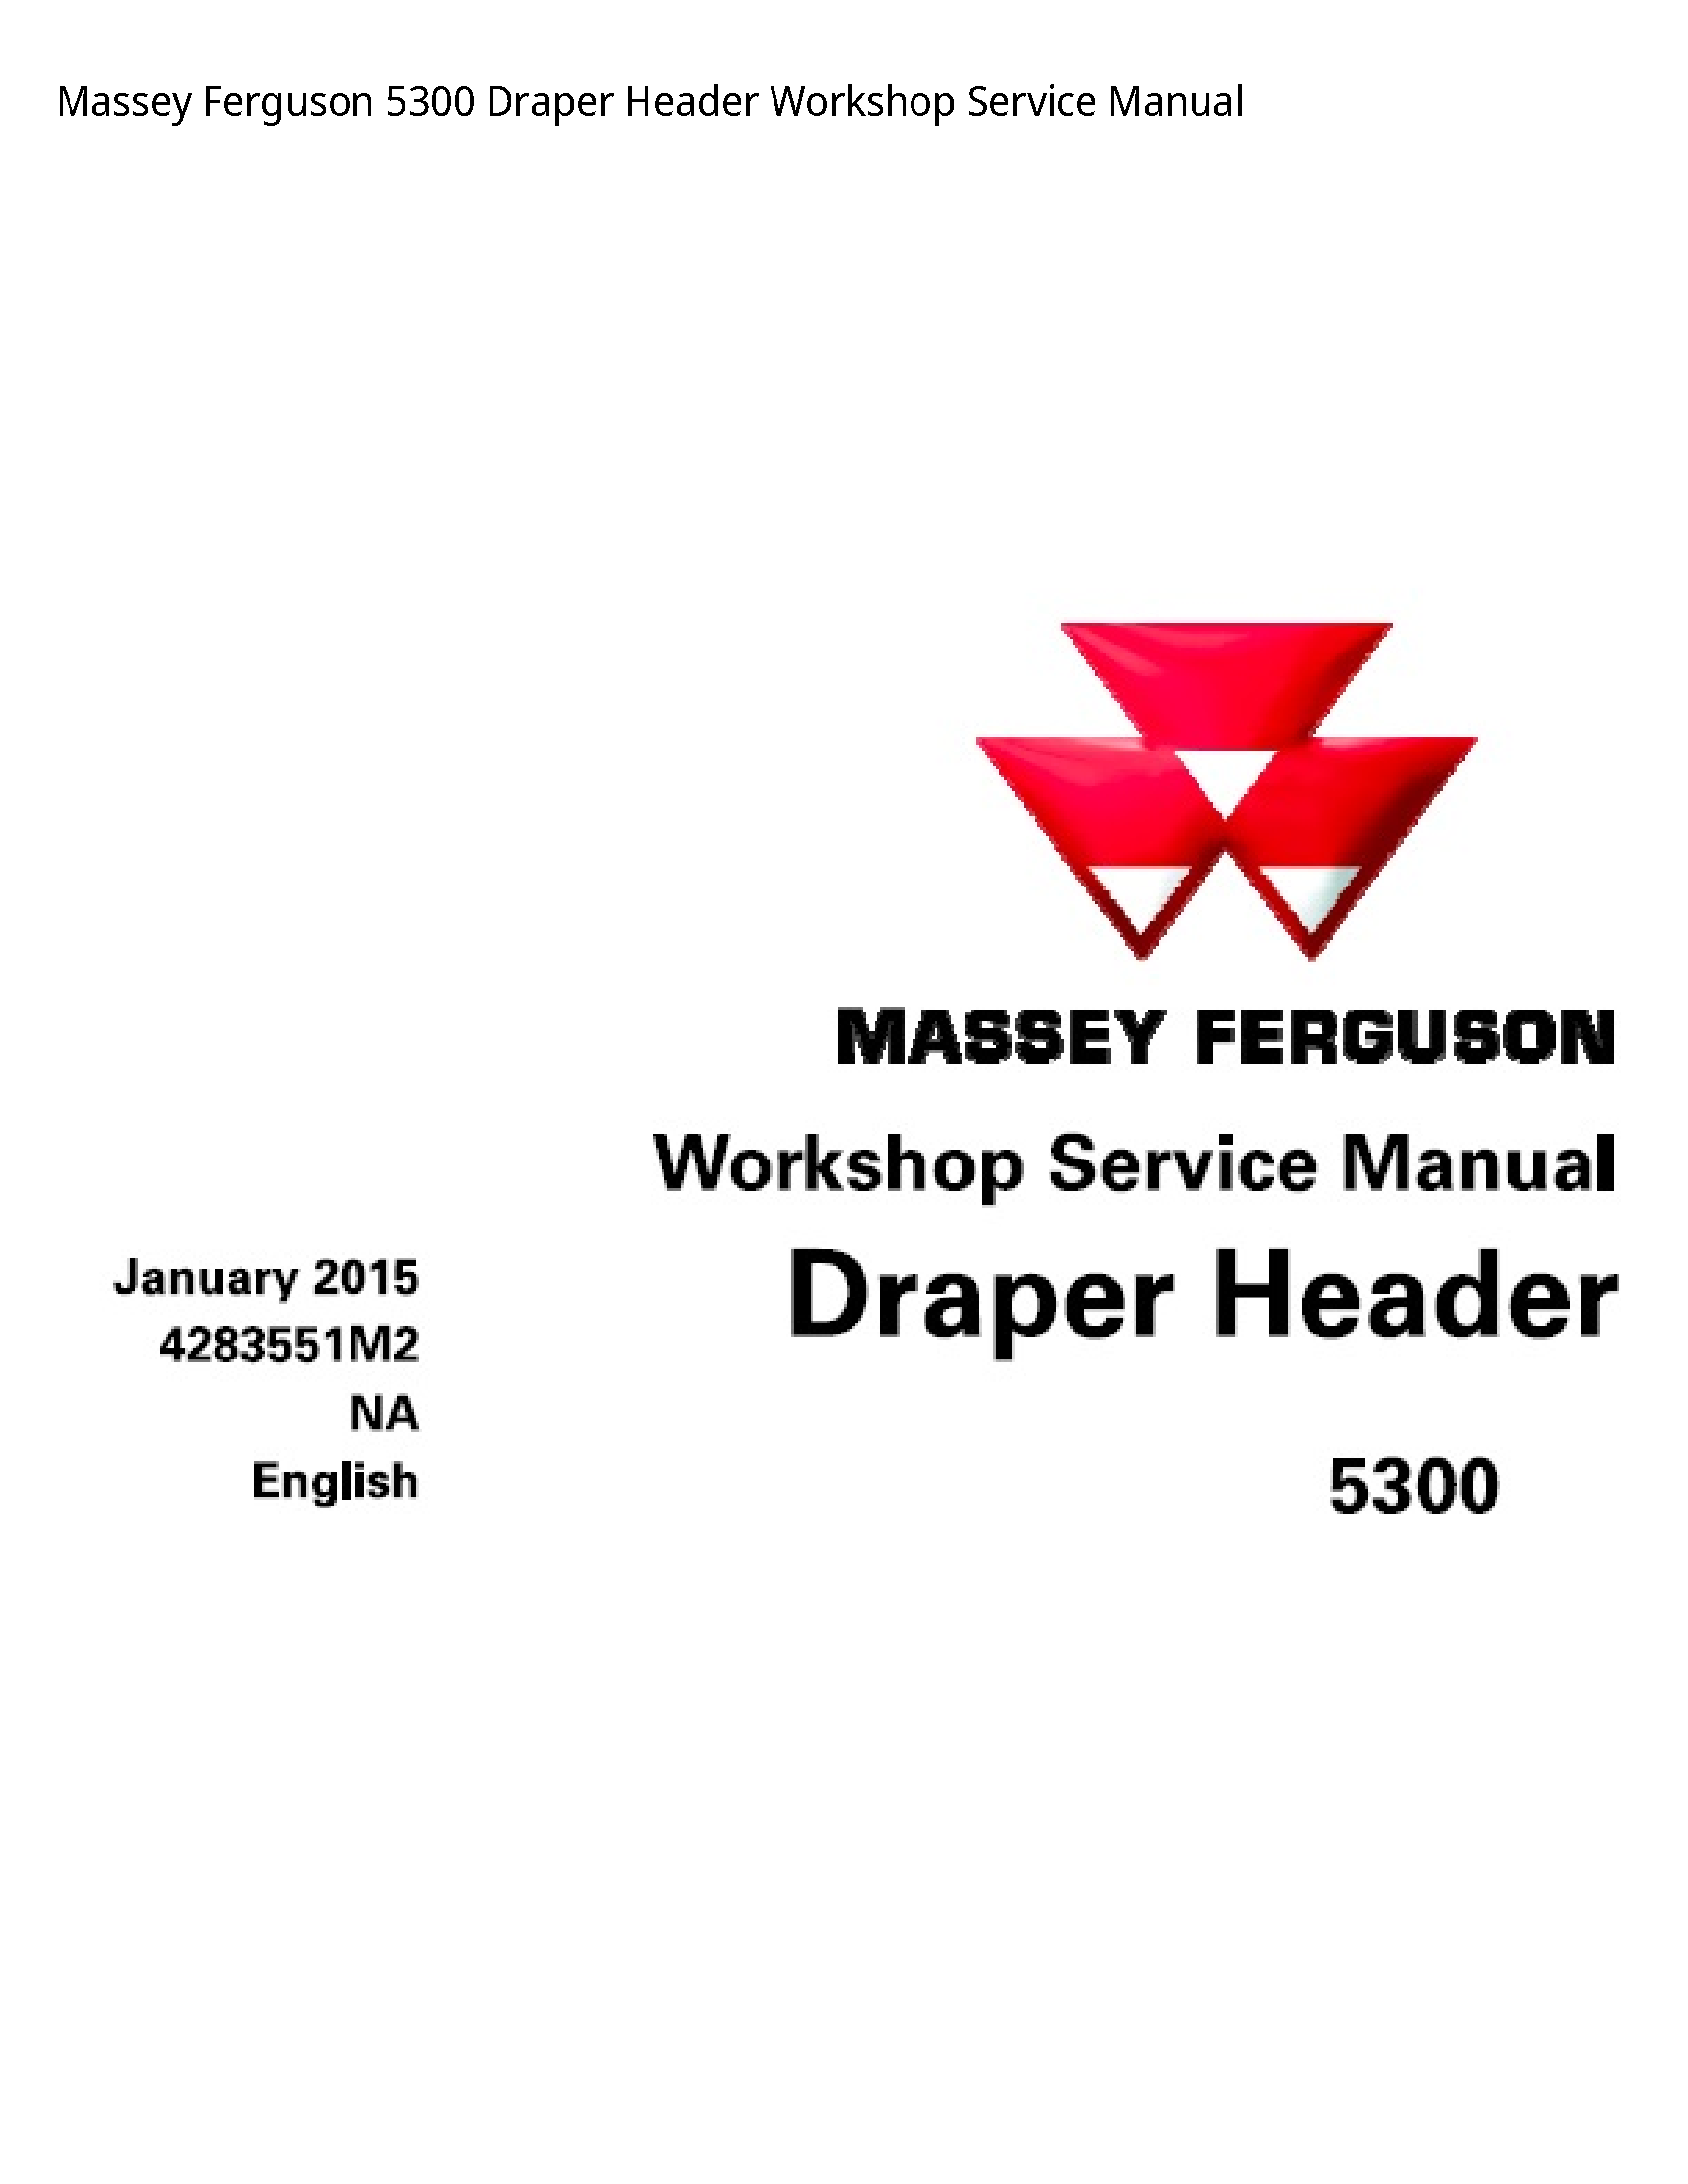 Massey Ferguson 5300 Draper Header Service manual